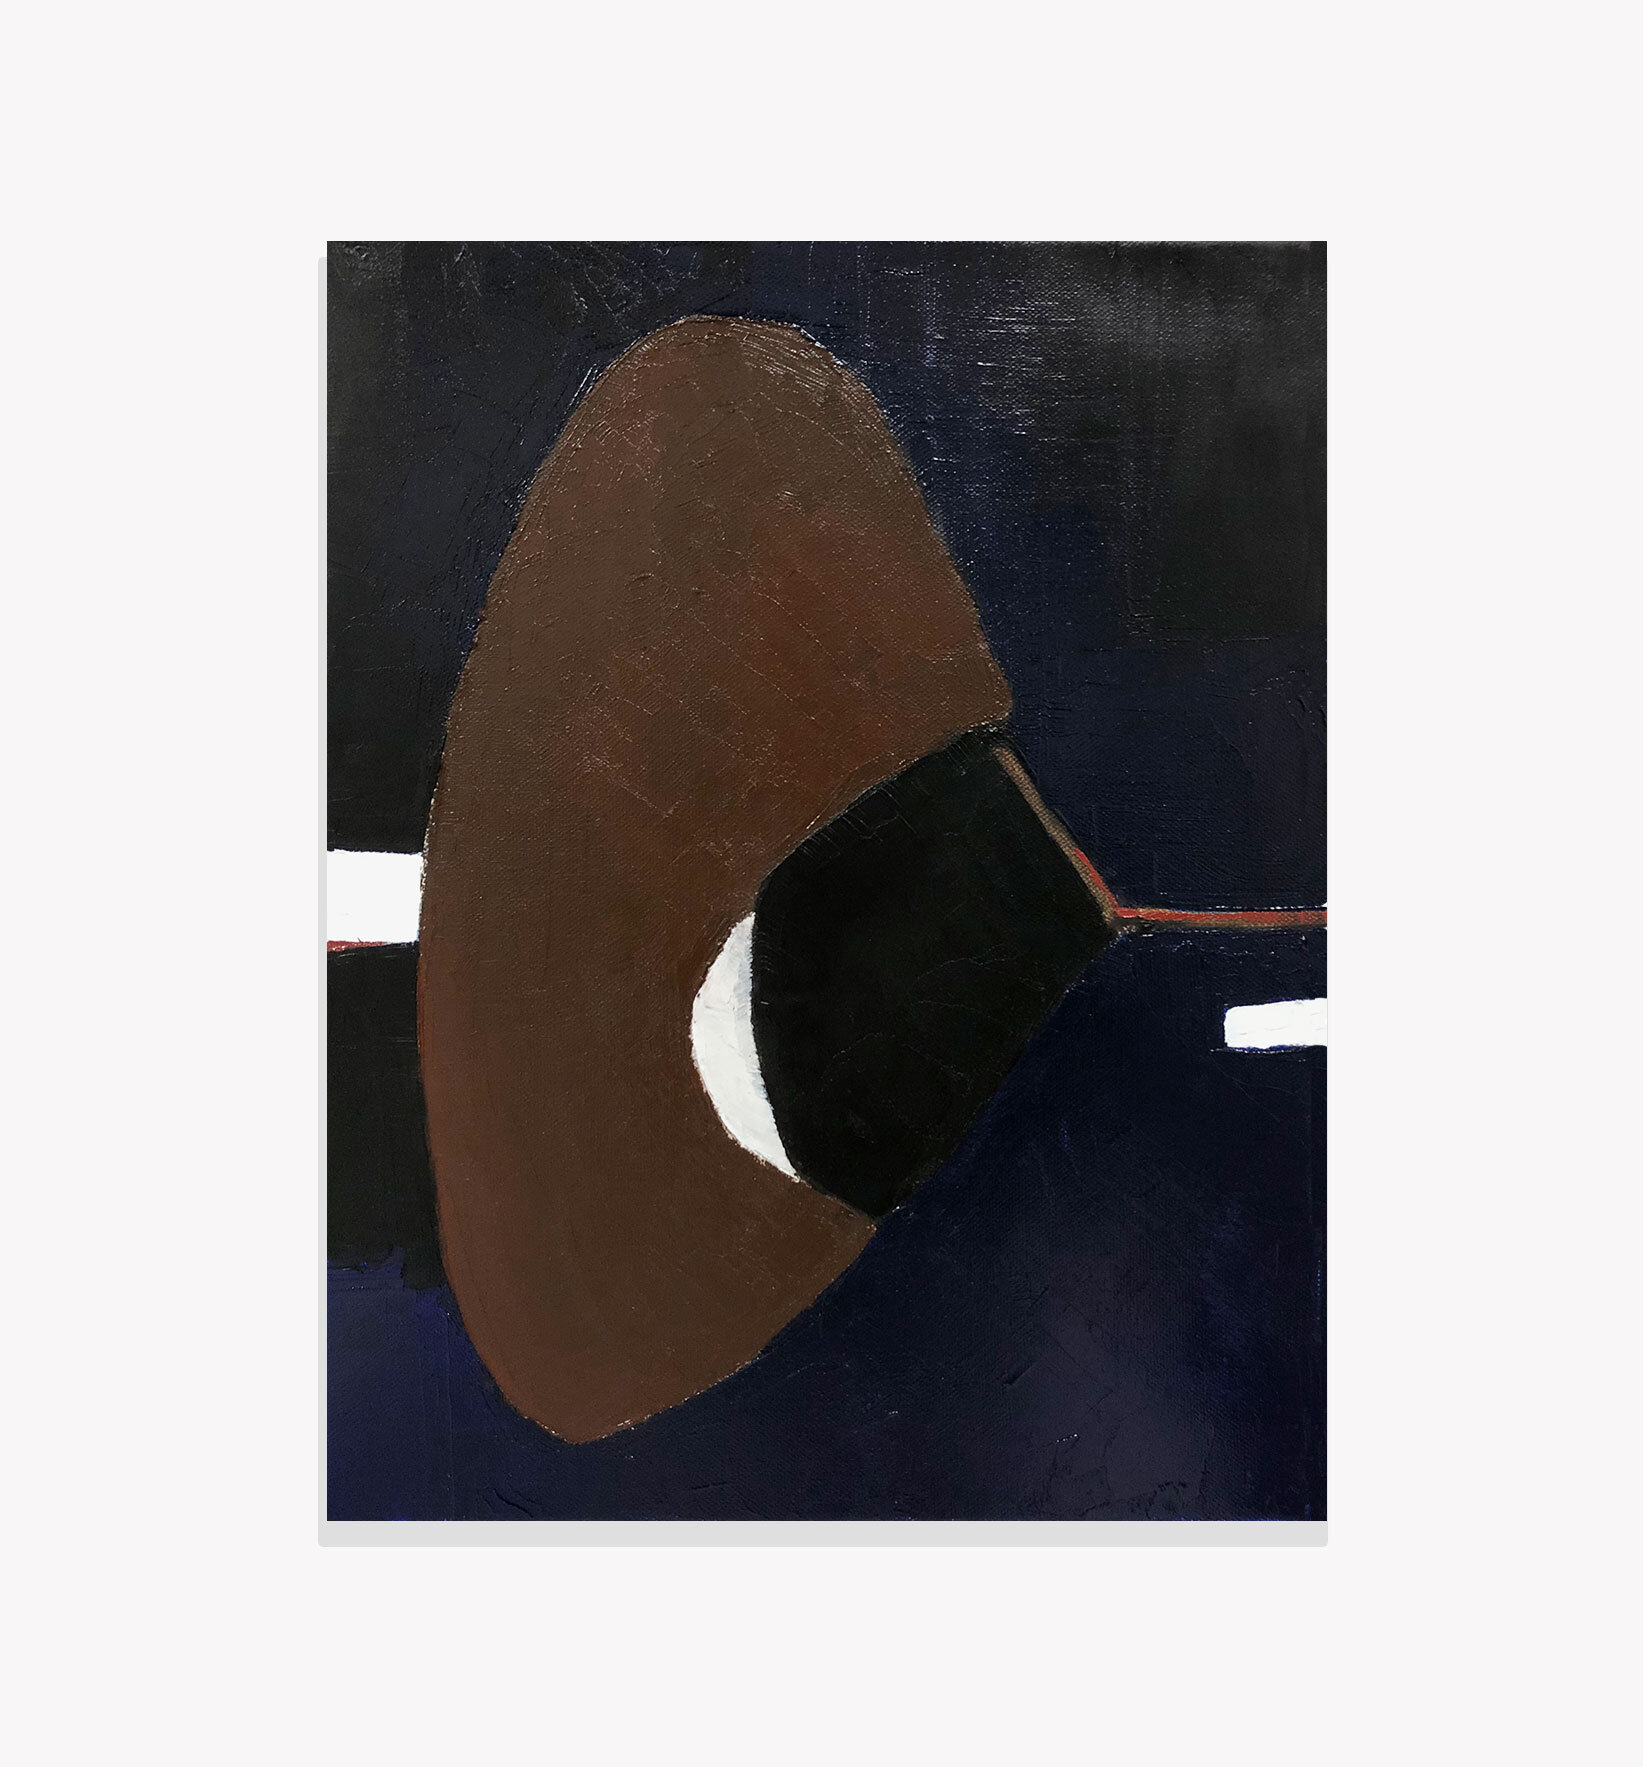   Eight , Kristi Head 2019. Oil on canvas, 14 x 1 1 inches. 